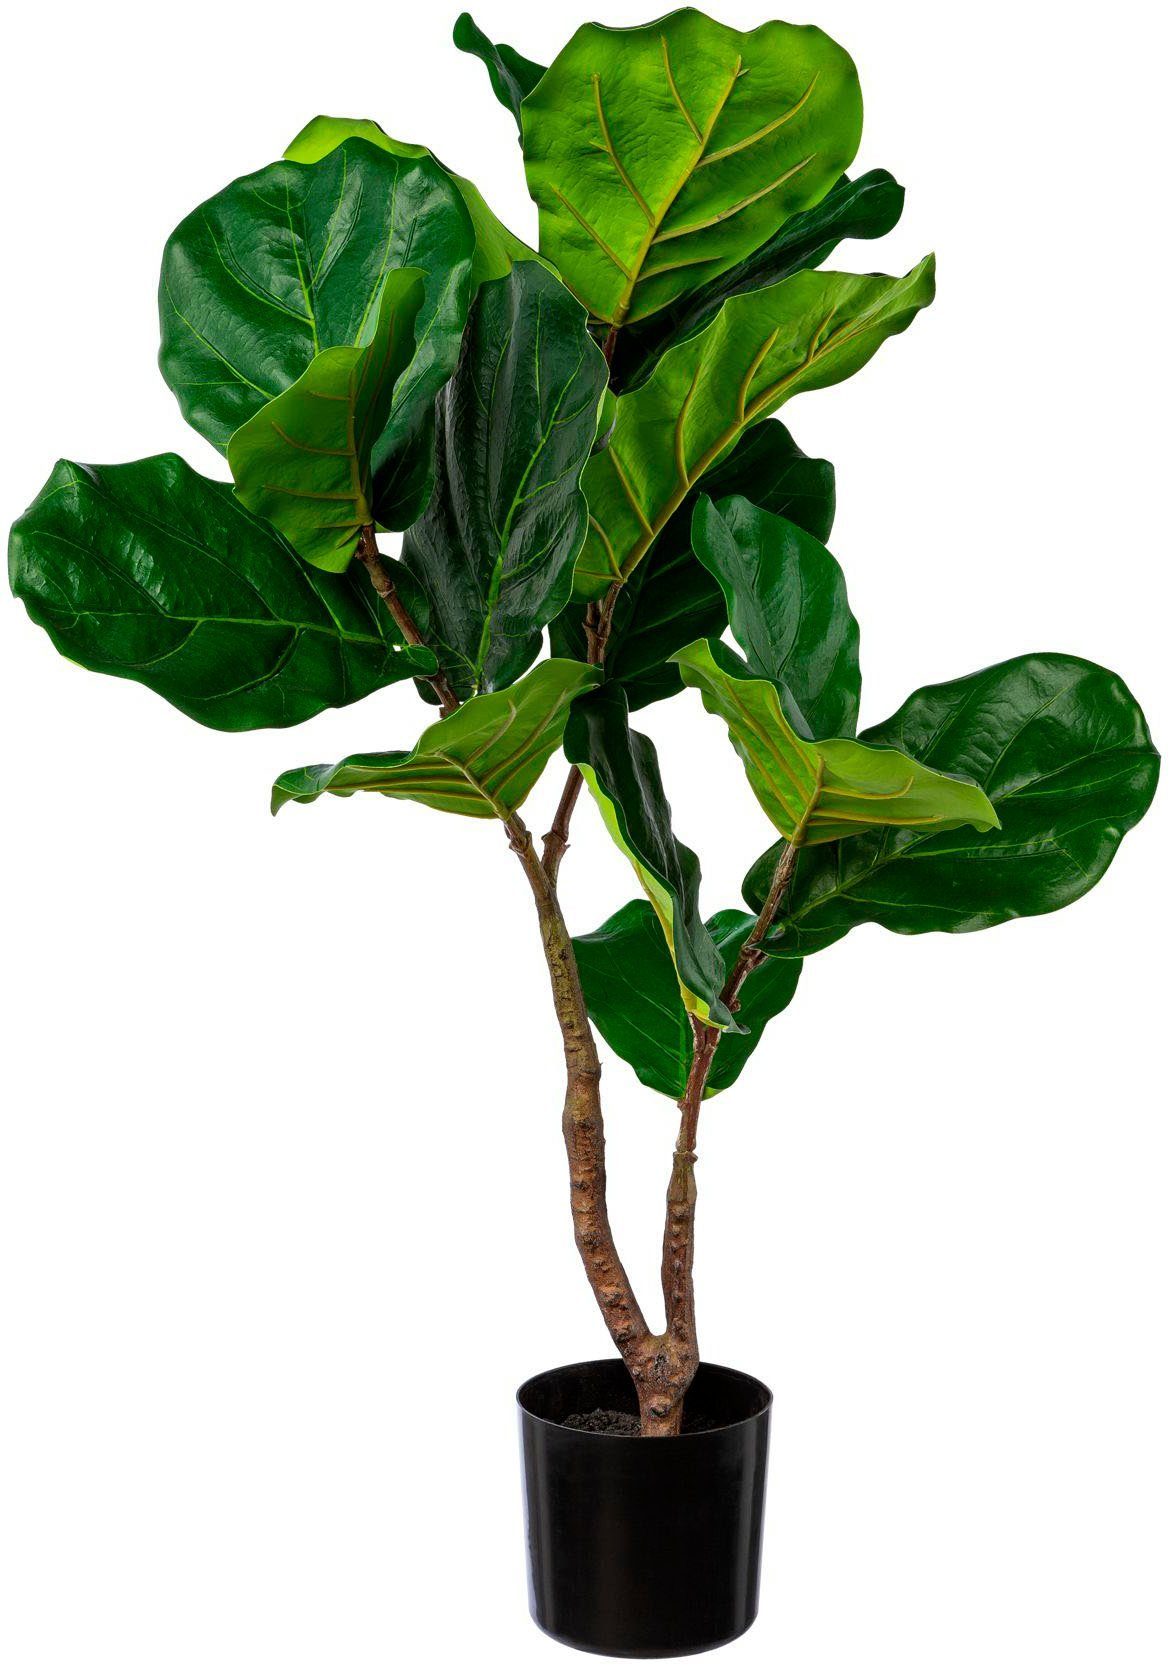 cm, Keramiktopf Creativ 80 Höhe green, Grünpflanze, Arecapalme im Kunstbaum